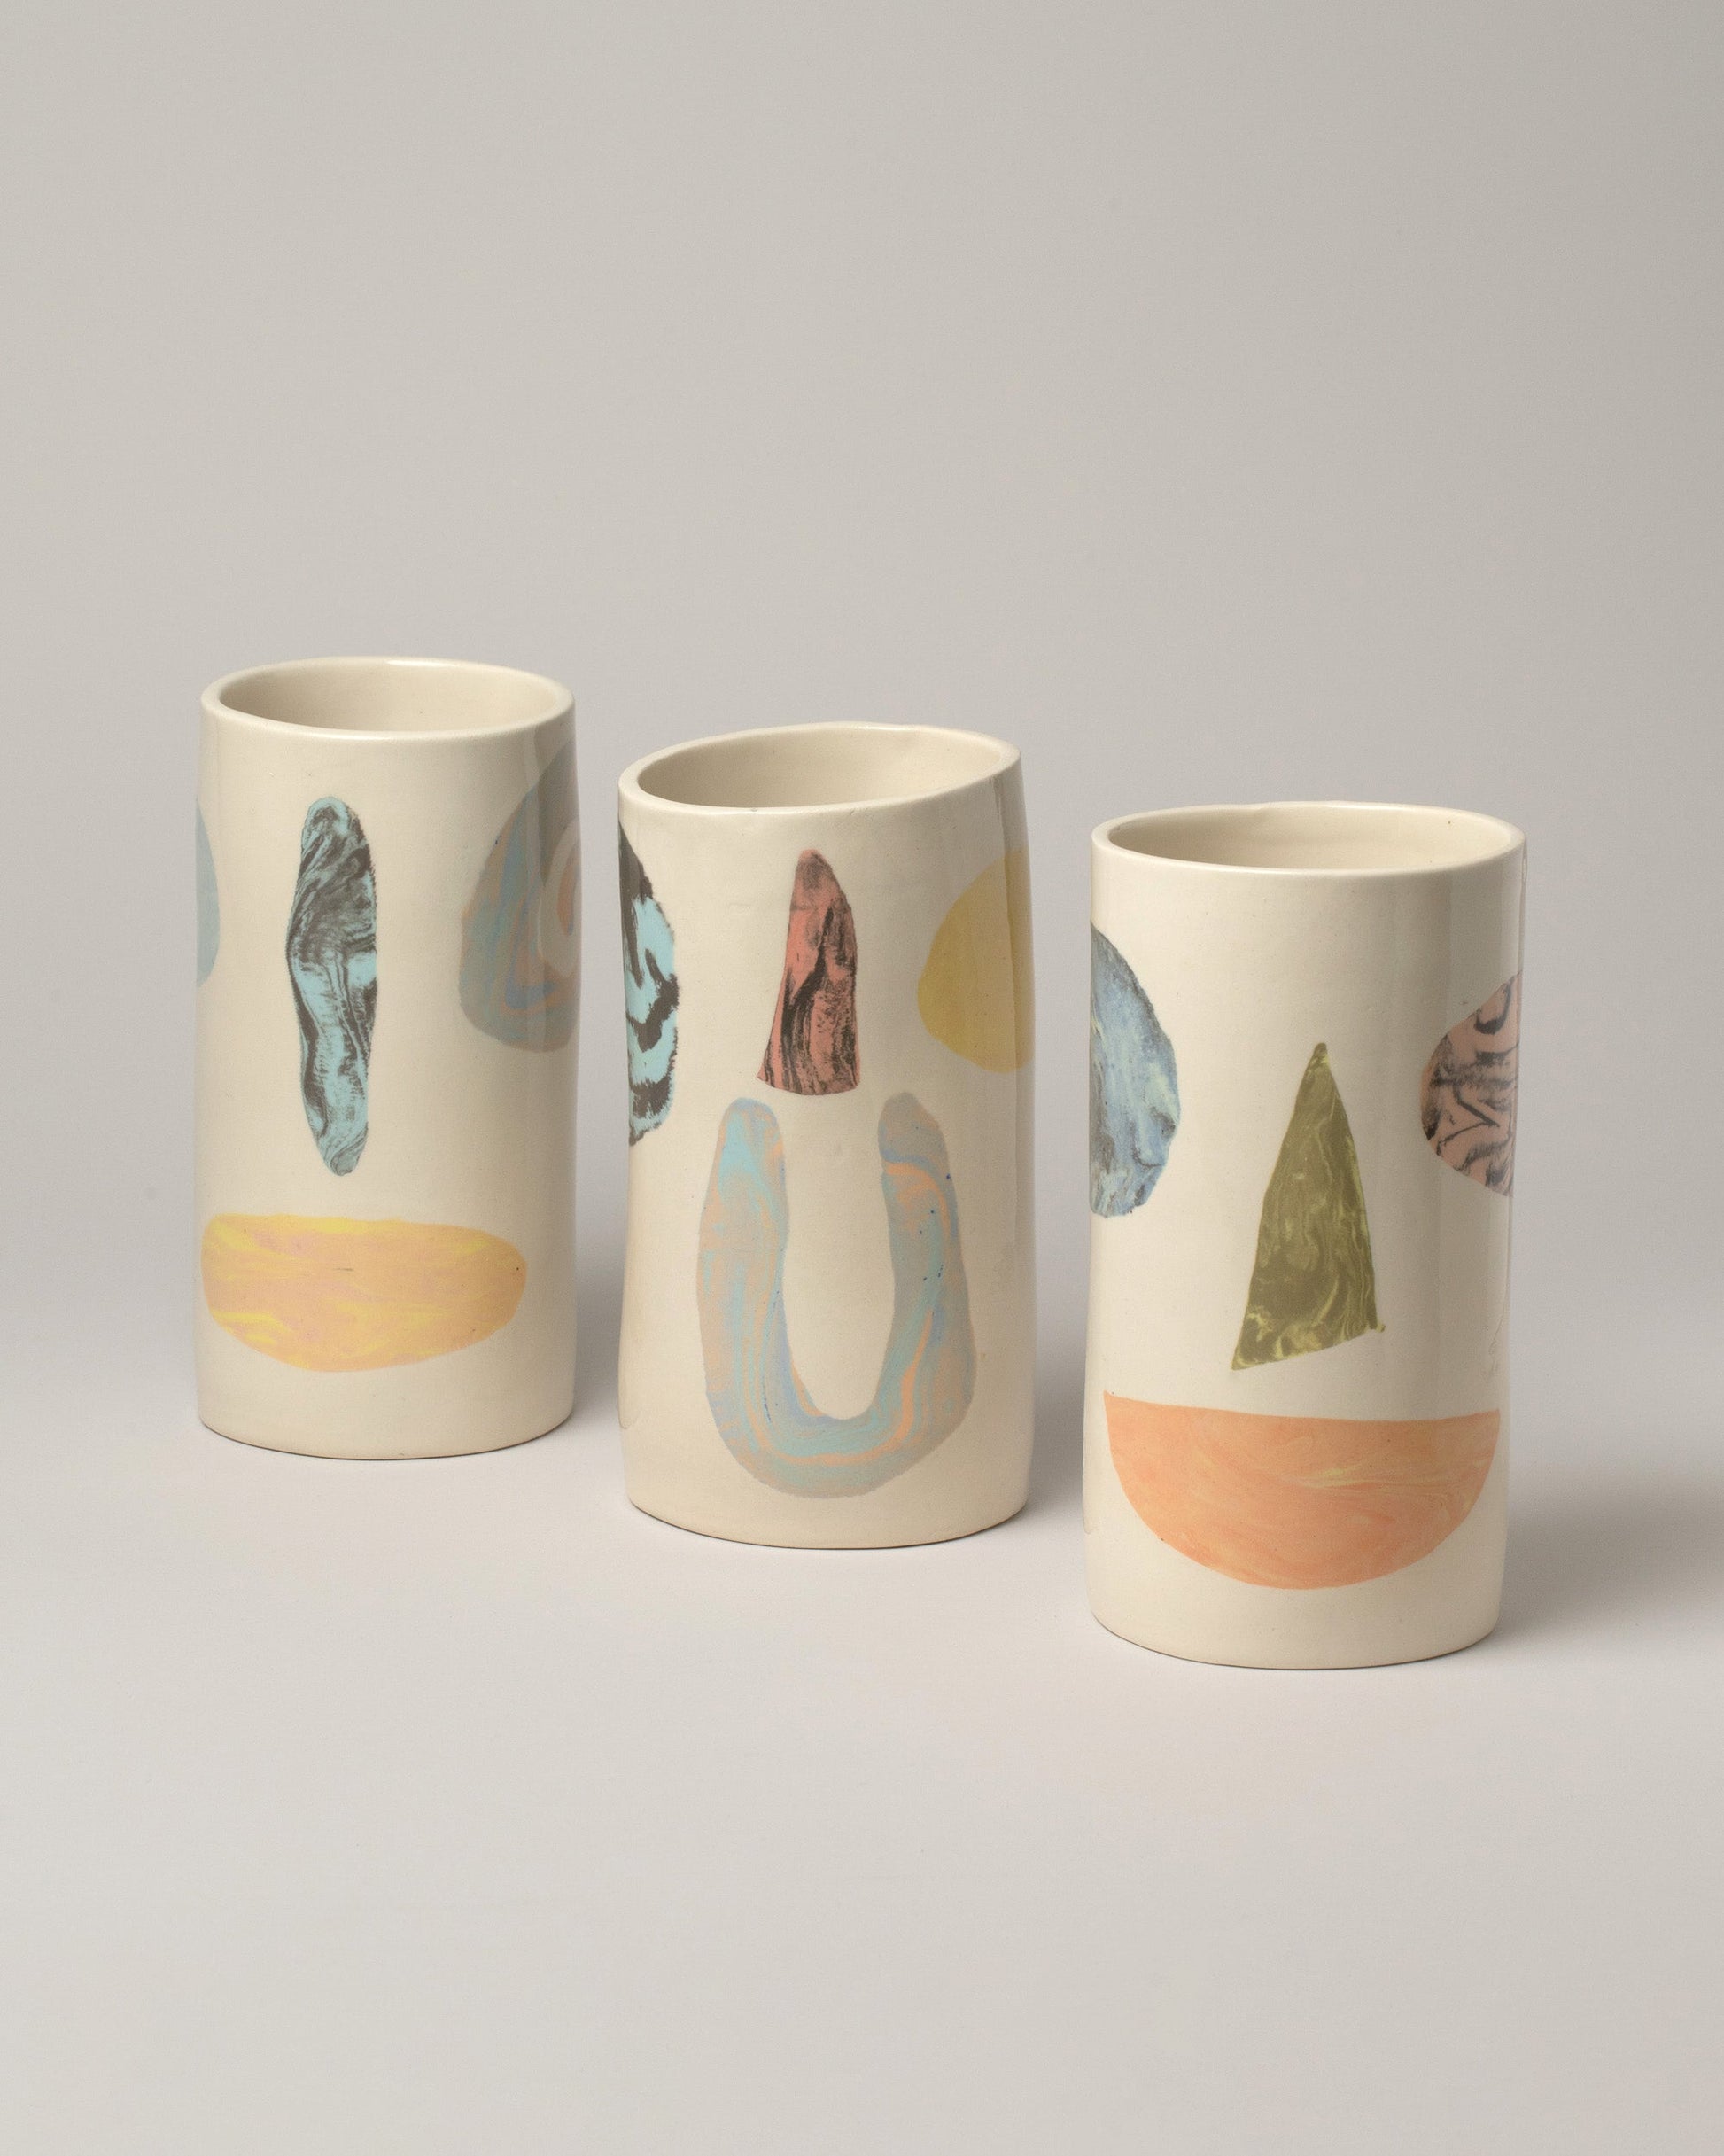 Group of E.E. Ceramics Smiley Vases on light color background.